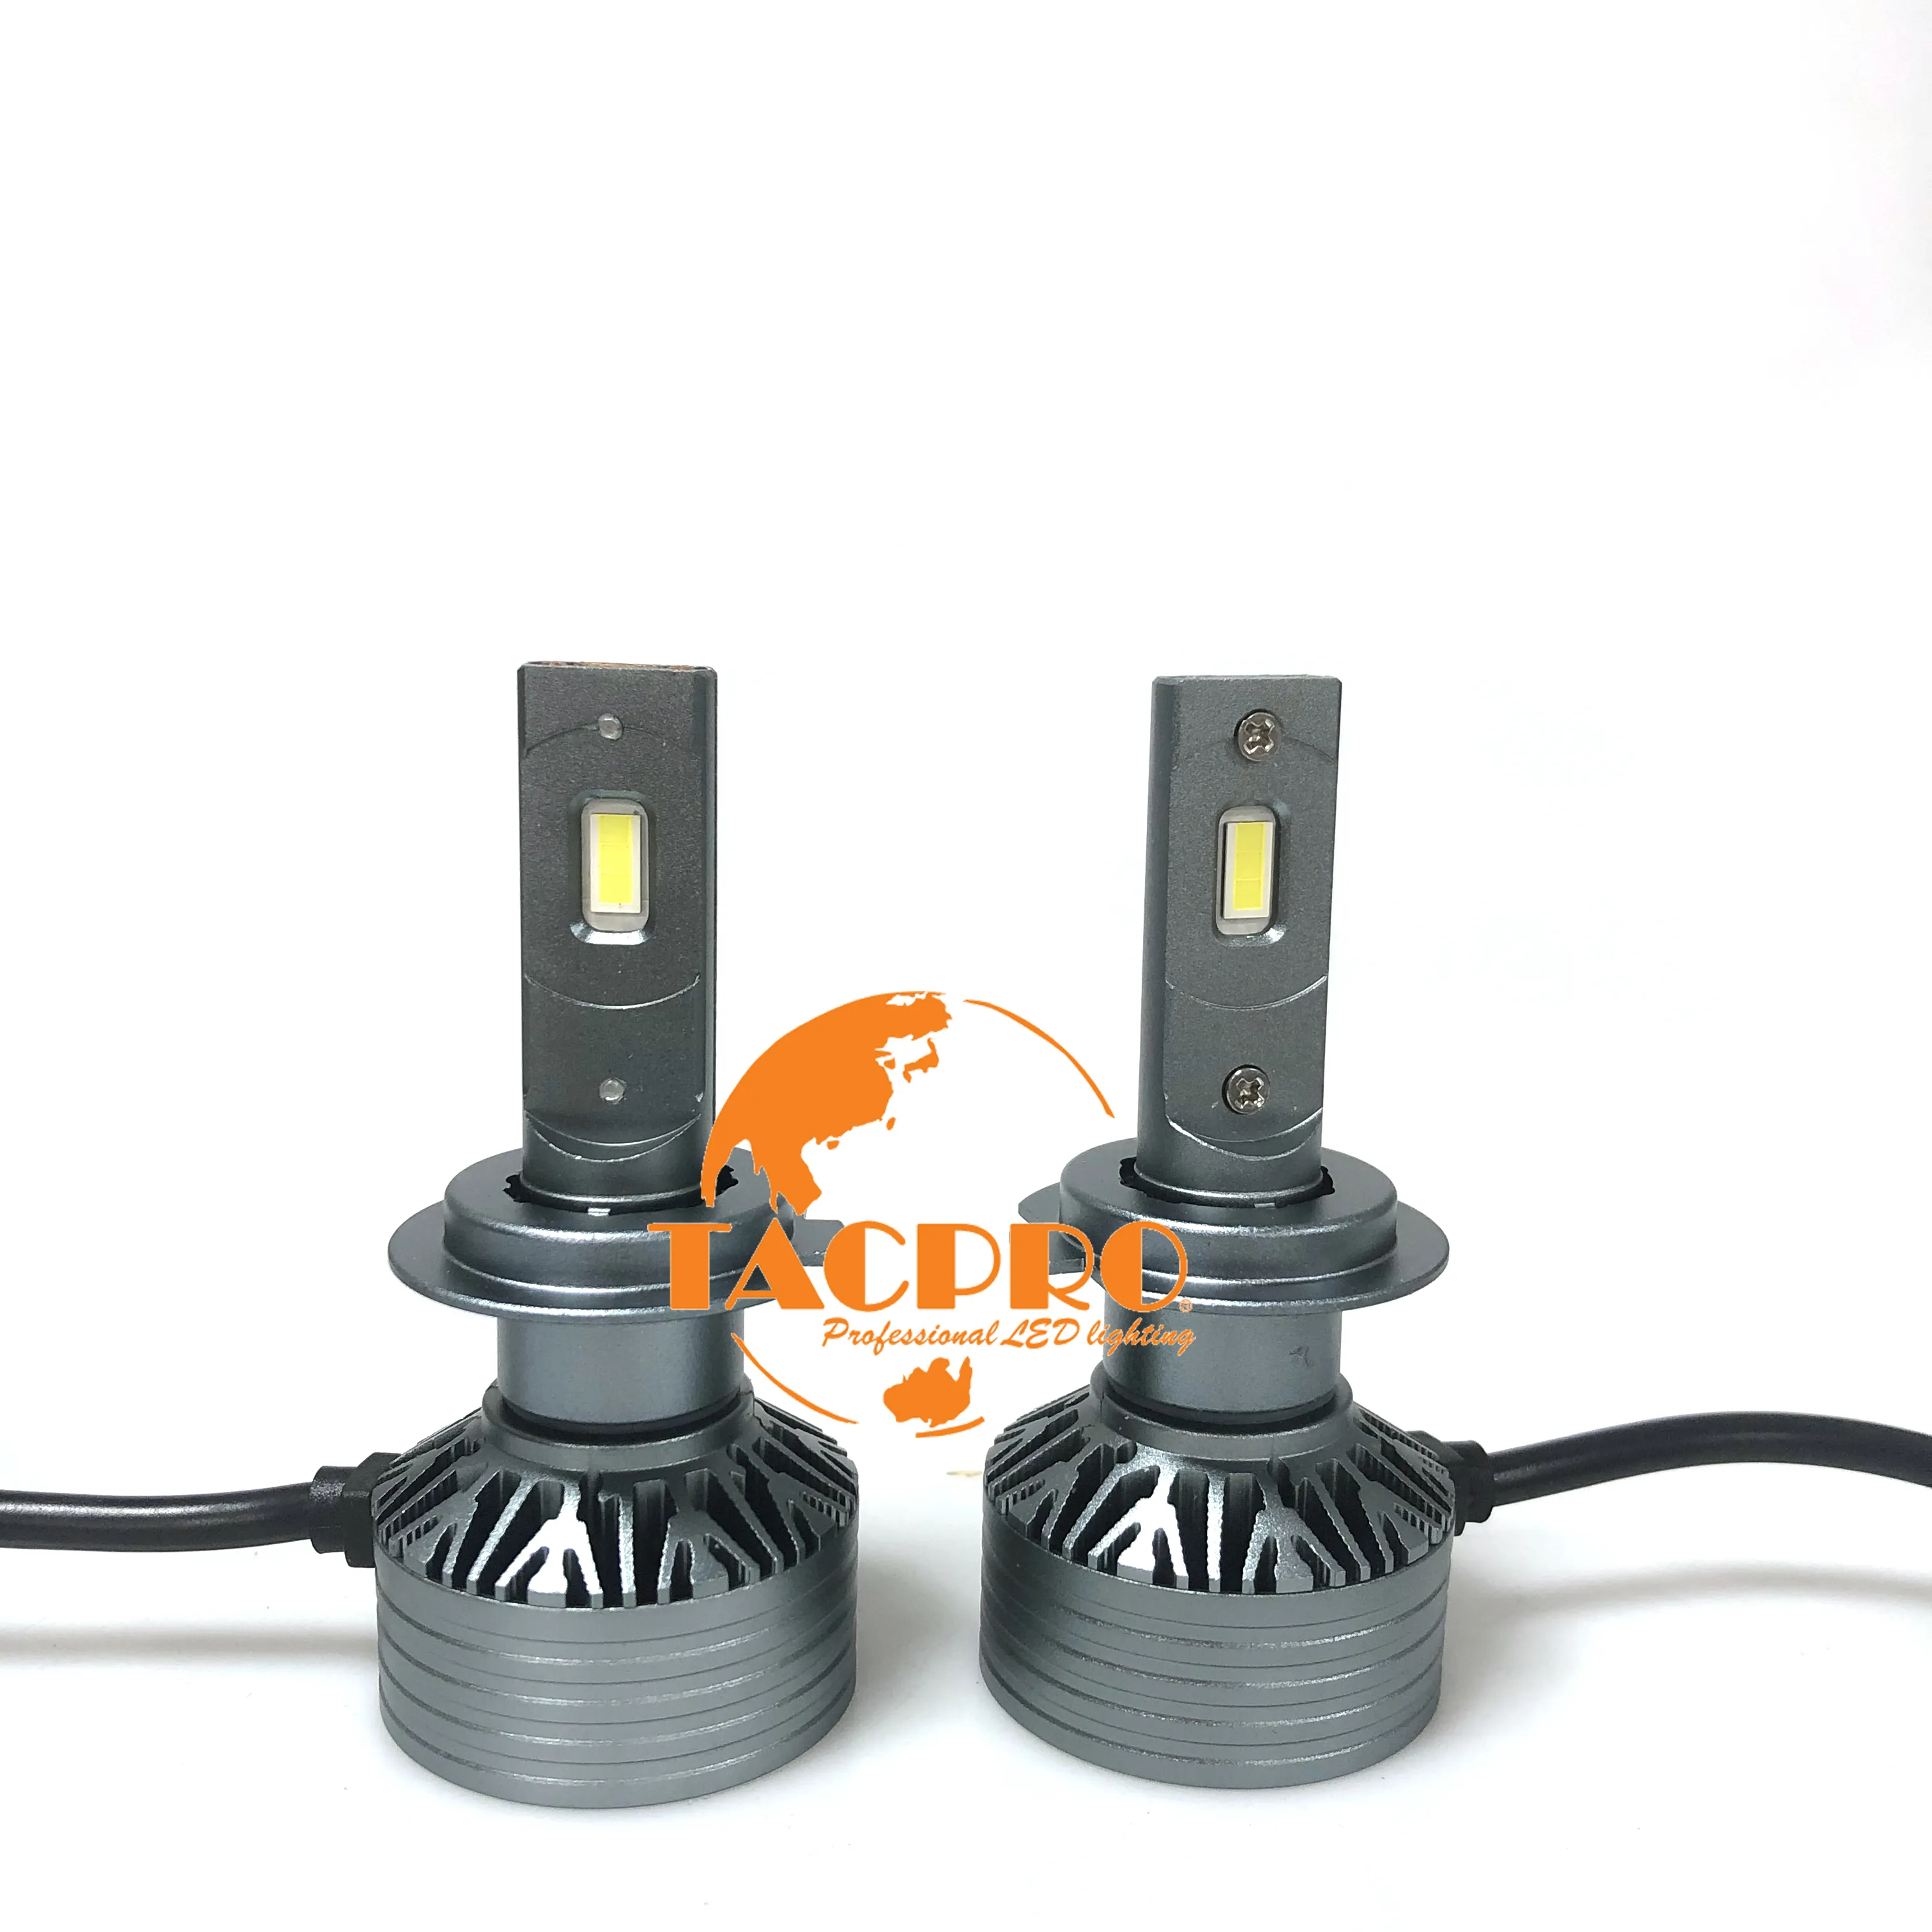 TACPRO-faros LED Oem para coche, impermeables, Plug And Play, tamaño pequeño, 12v, alta potencia, 45W, Chip T2 Csp, con decodificador